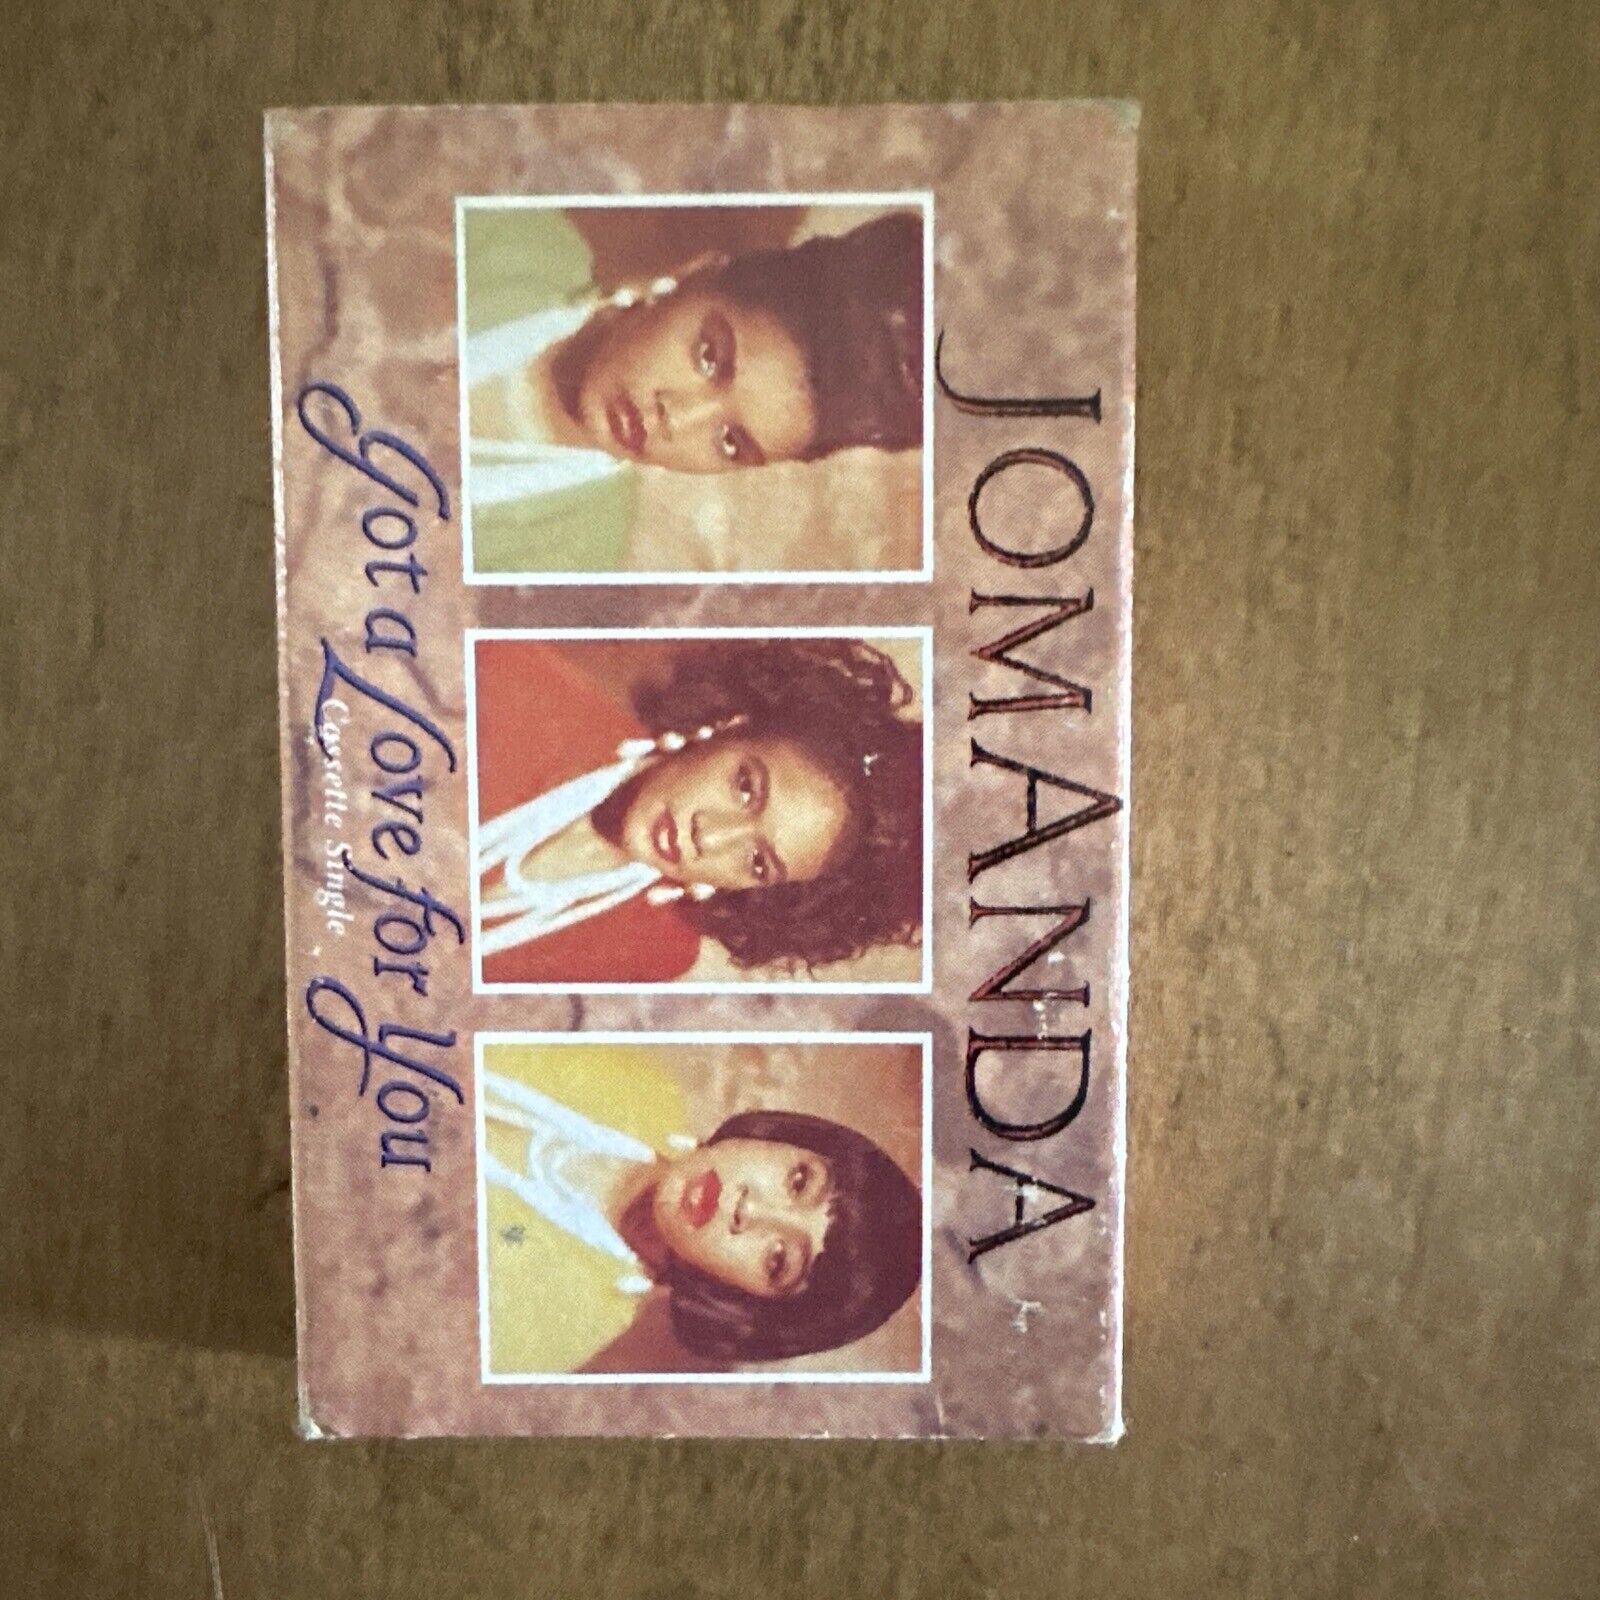 Got a Love for You [Single] by Jomanda (Cassette, Aug-1991, Atlantic (Label))